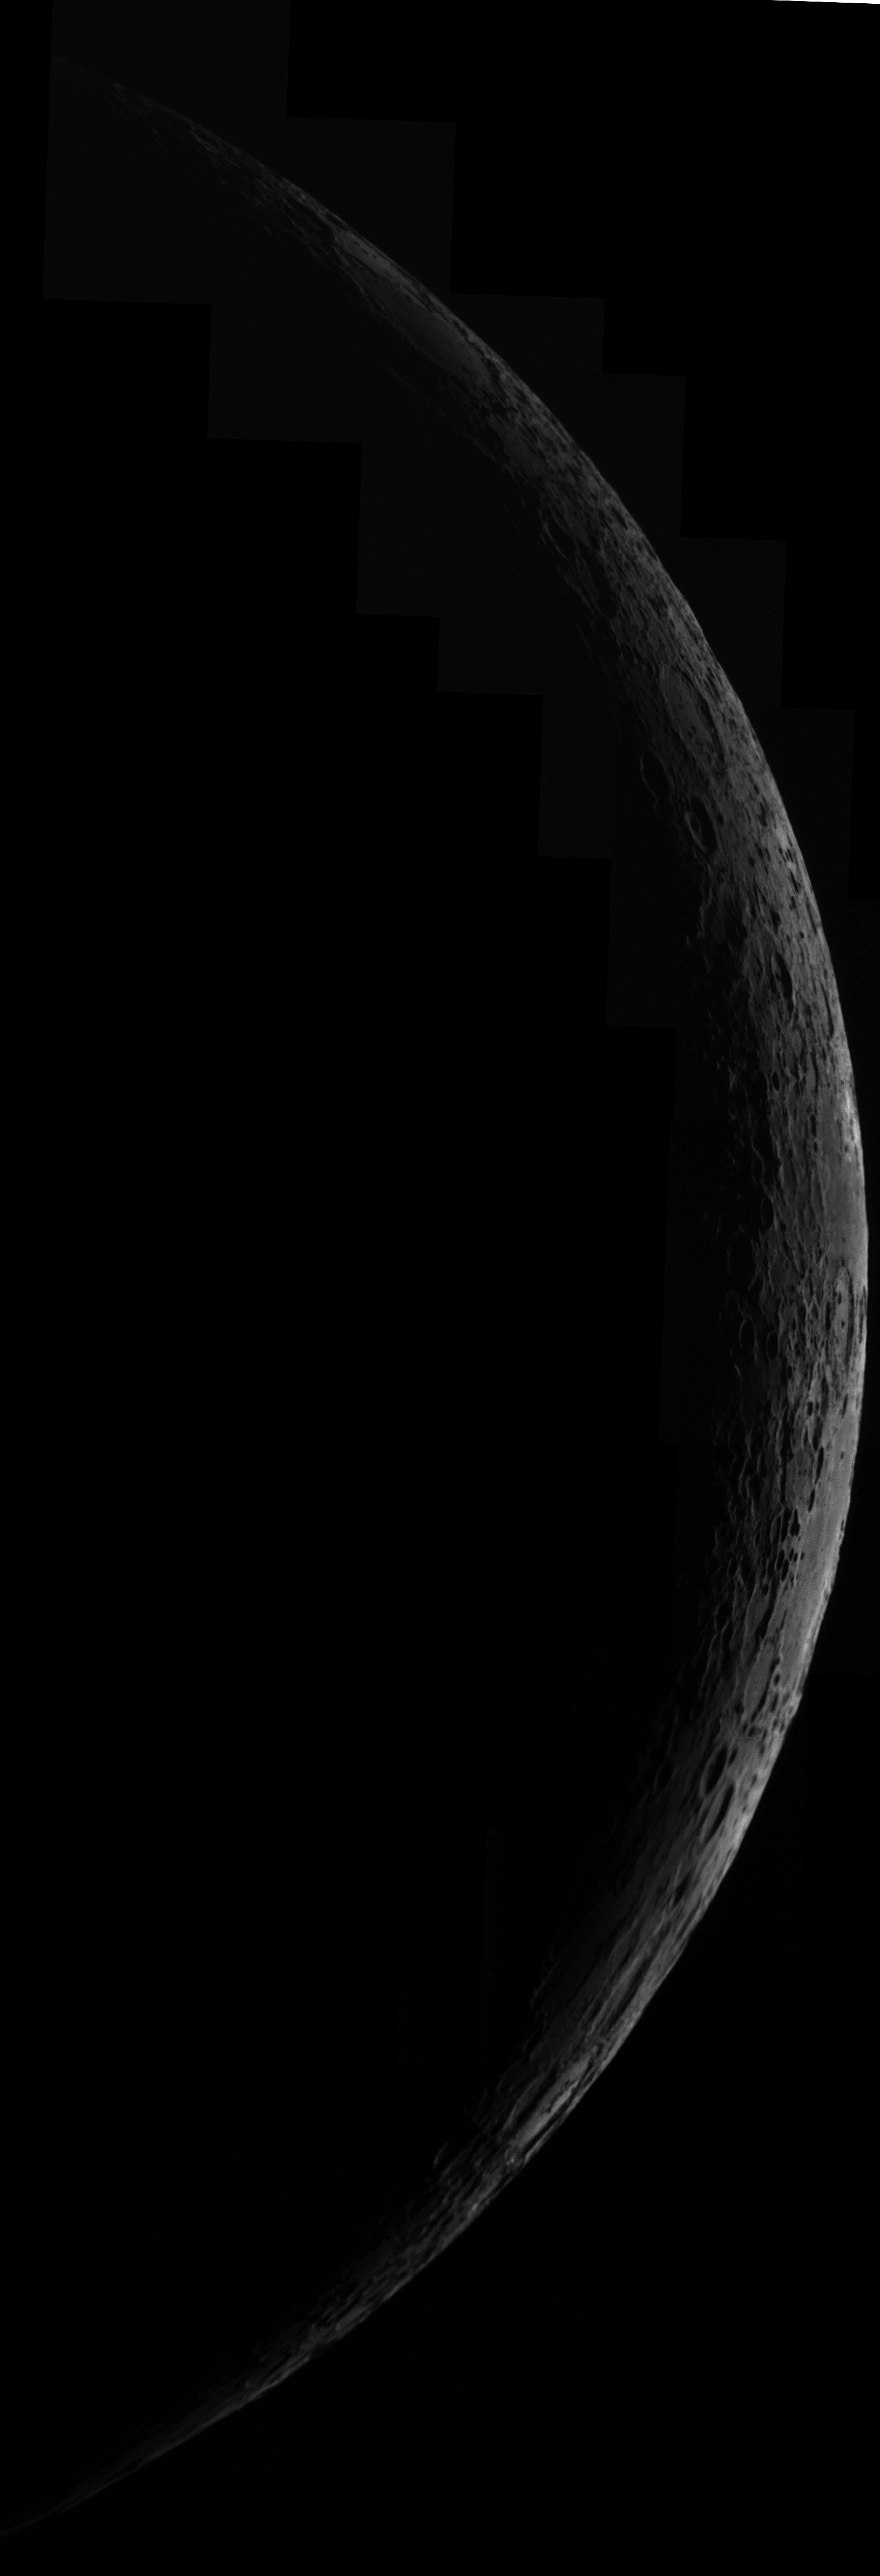 2Day_Crescent_Moon.jpg